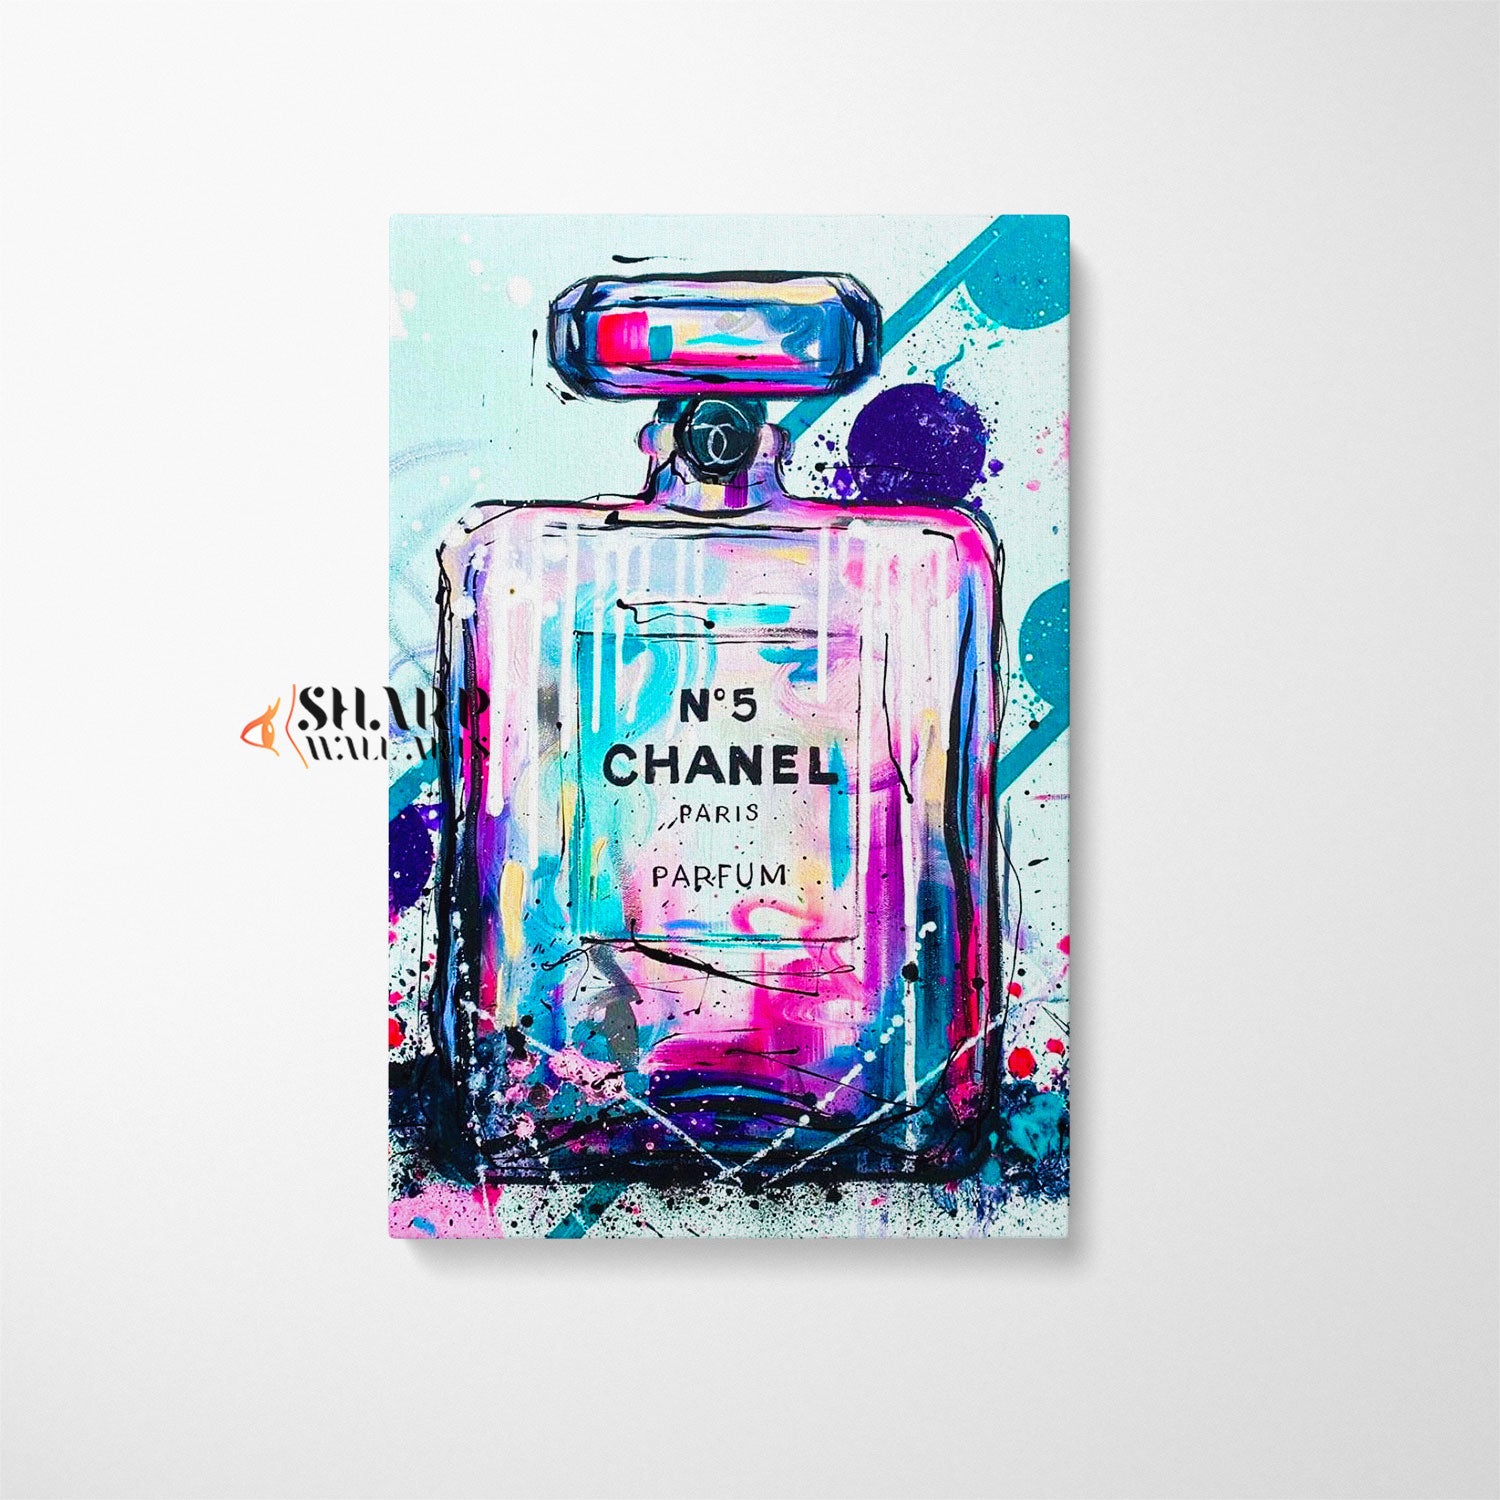 Chanel Perfume Bottle Canvas Wall Art